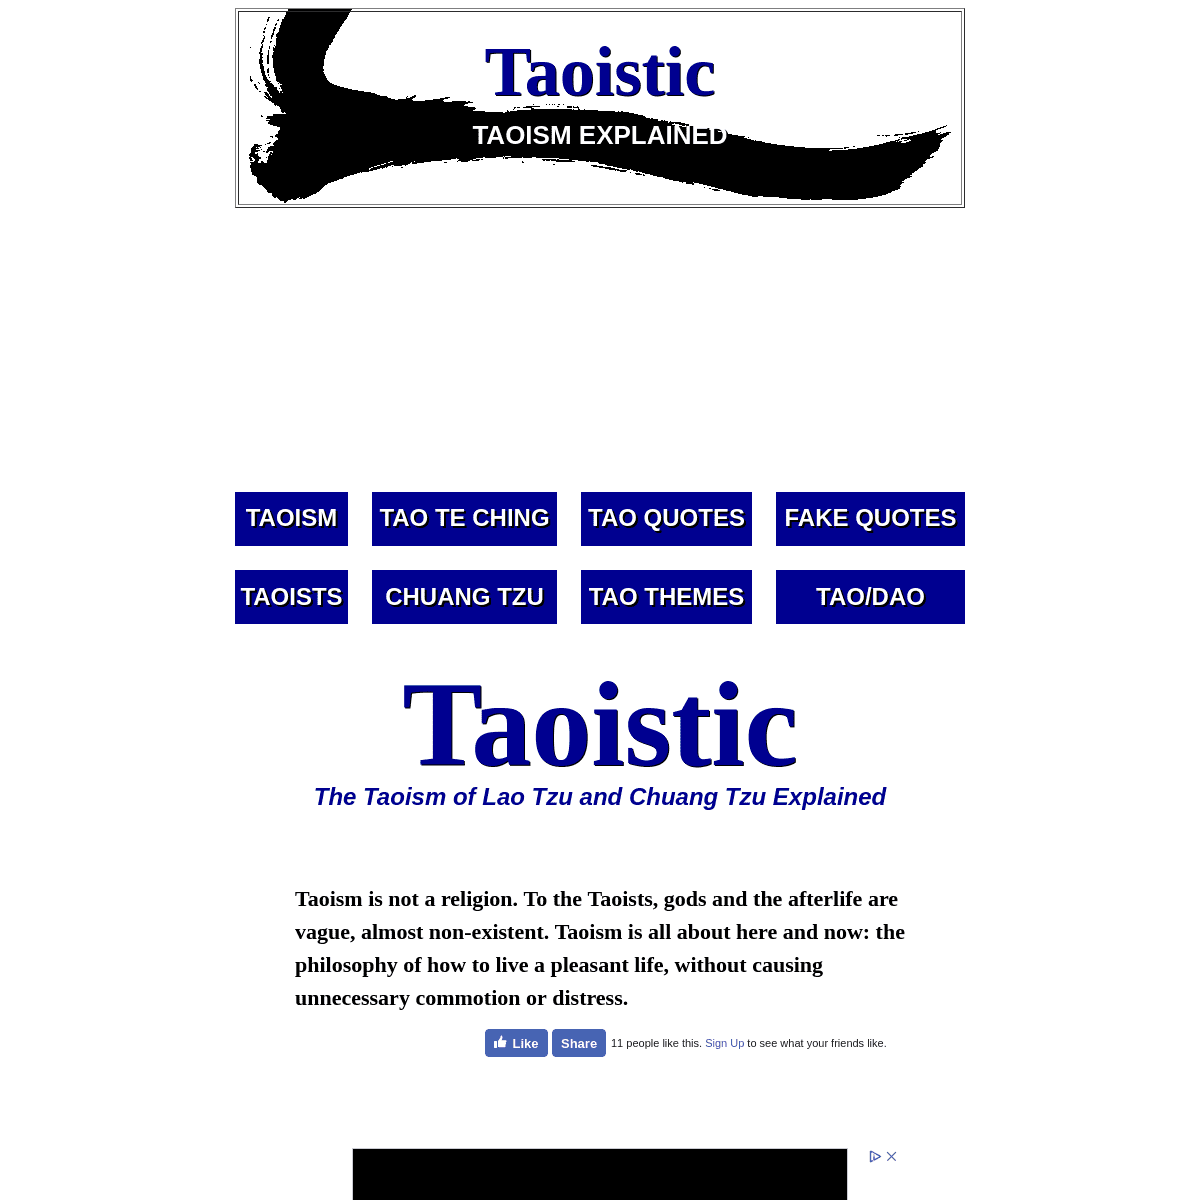 A complete backup of taoistic.com